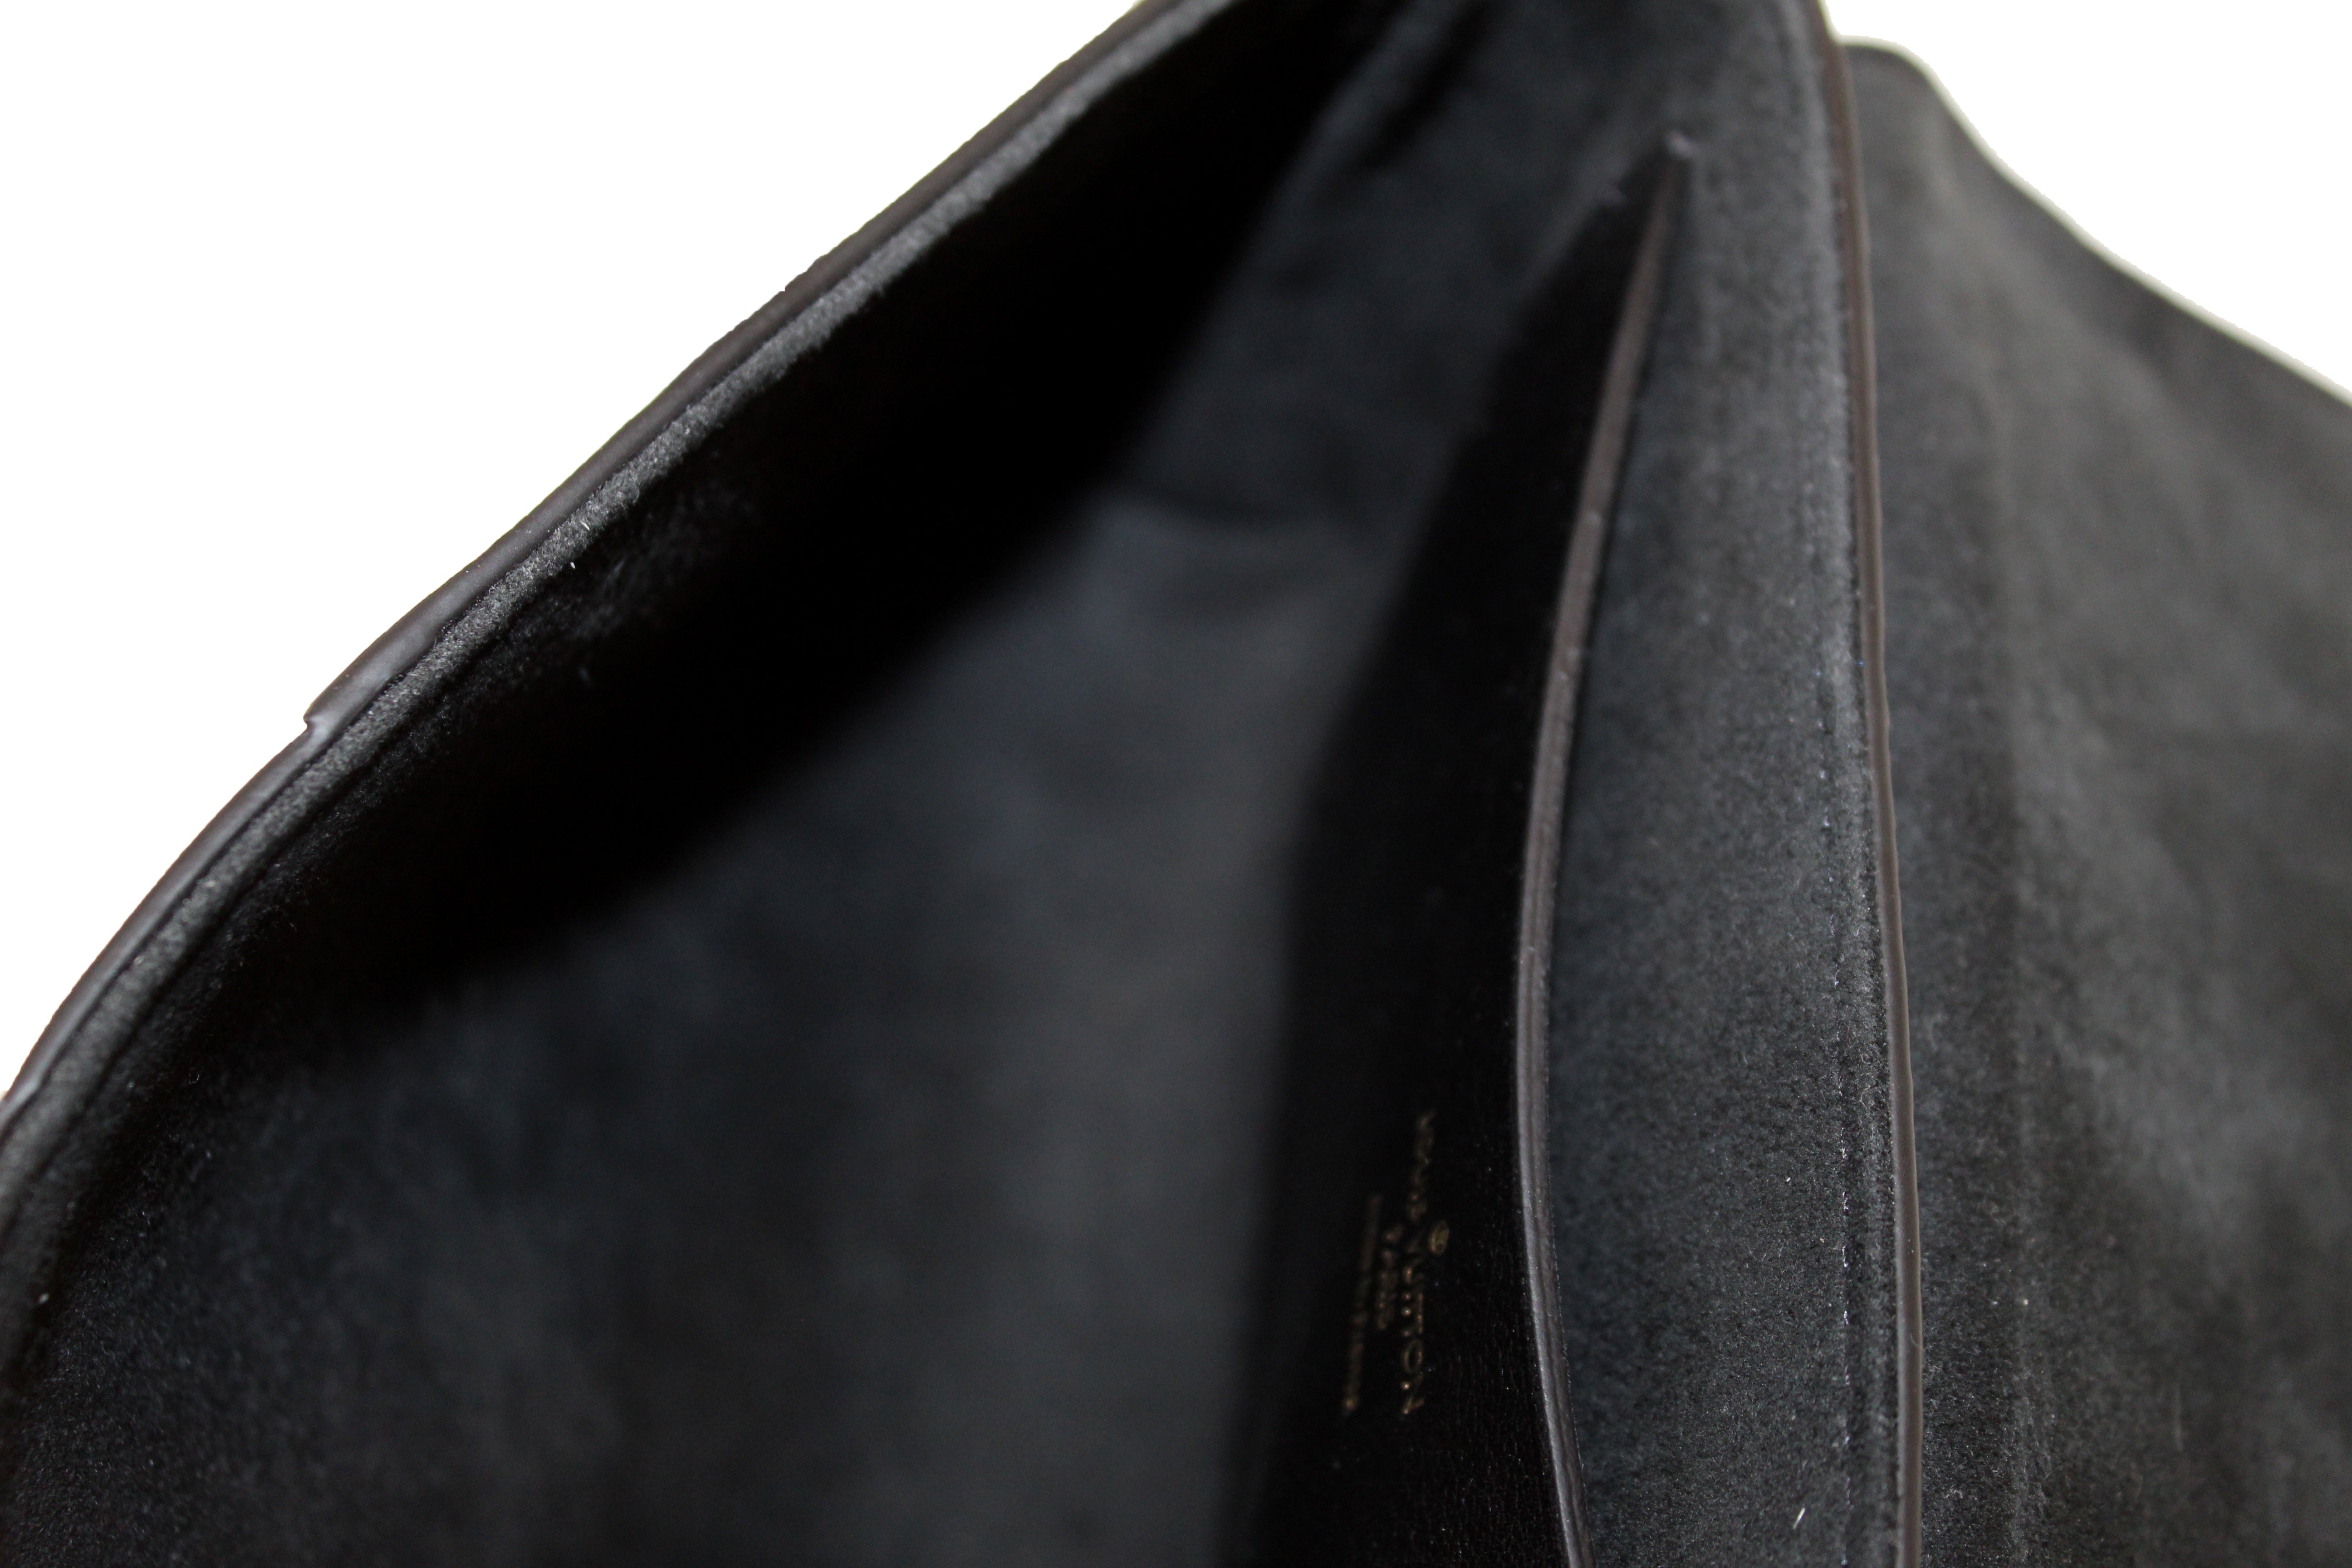 Authentic Louis Vuitton Black Calfskin Leather Love Note Bag